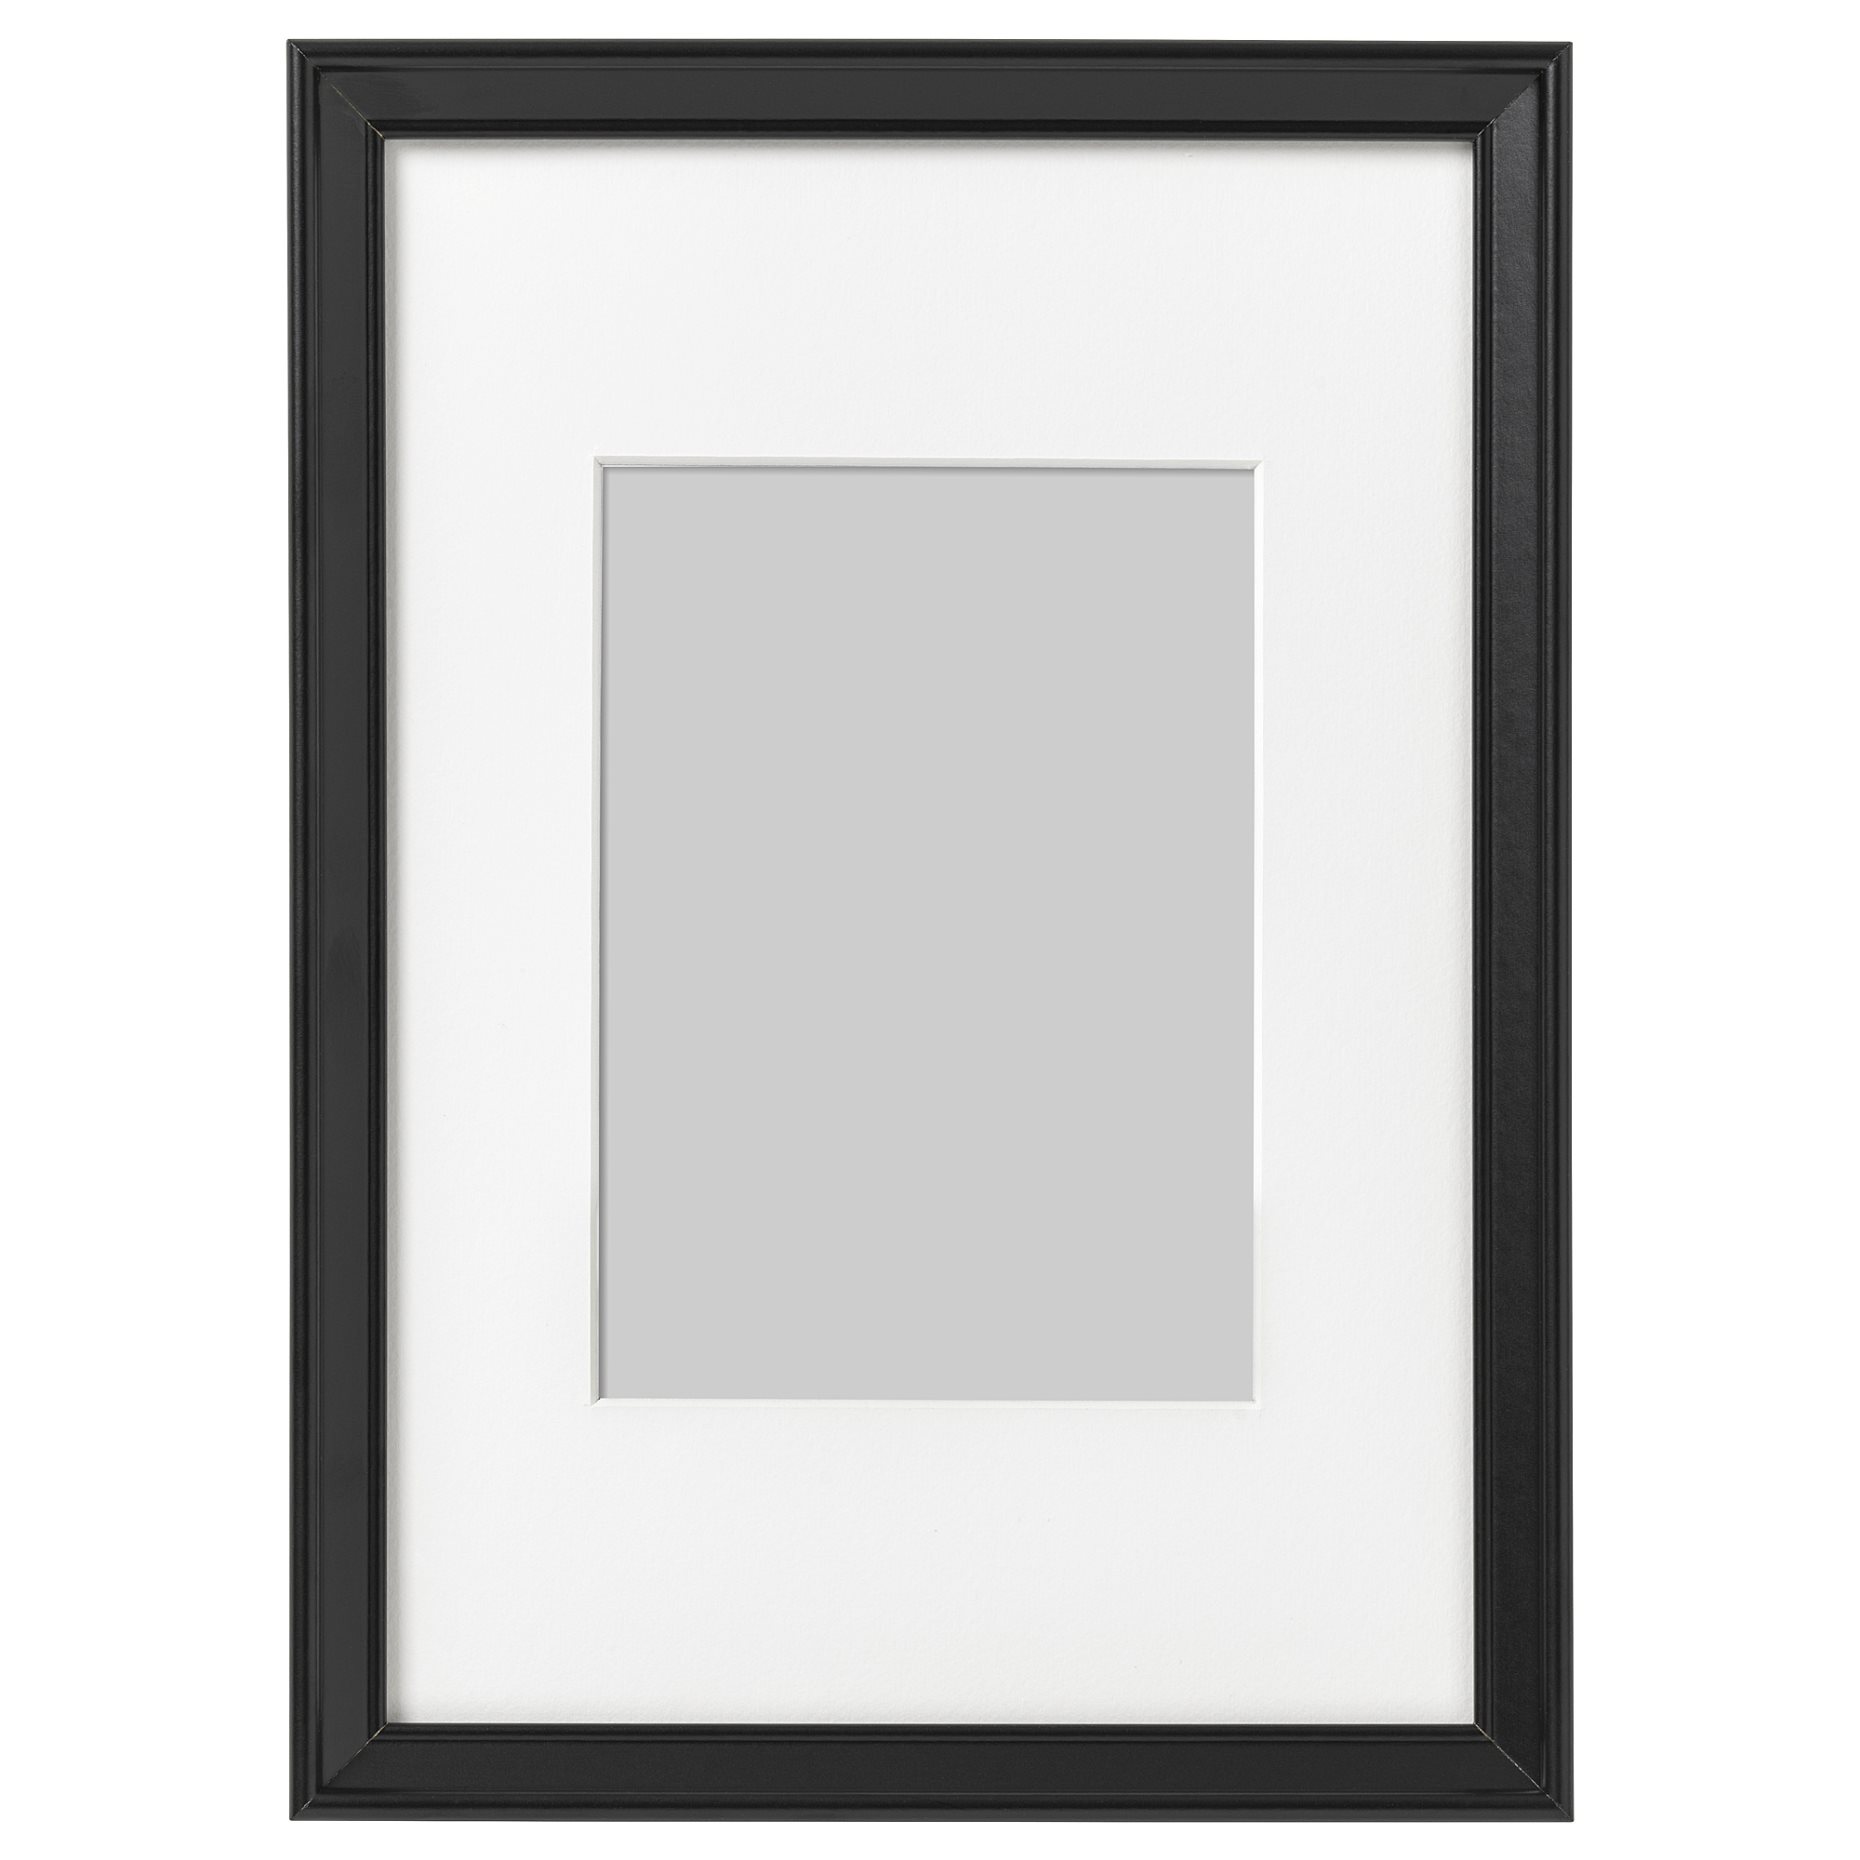 KNOPPÄNG, frame, 21x30 cm, 503.871.22